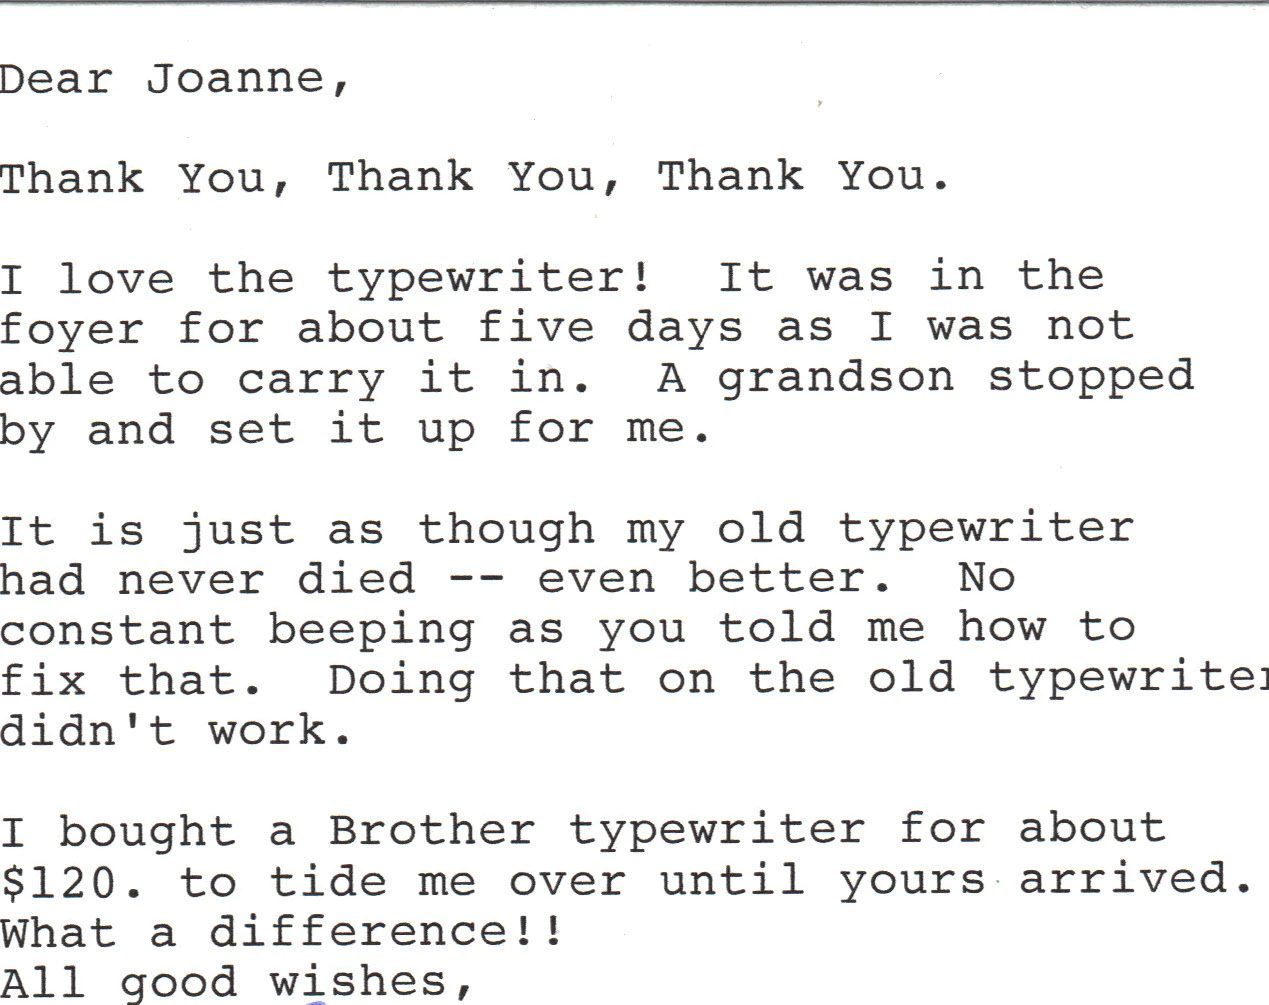 A testimonial saying "Thank You, Thank You. I love the typewriter!"